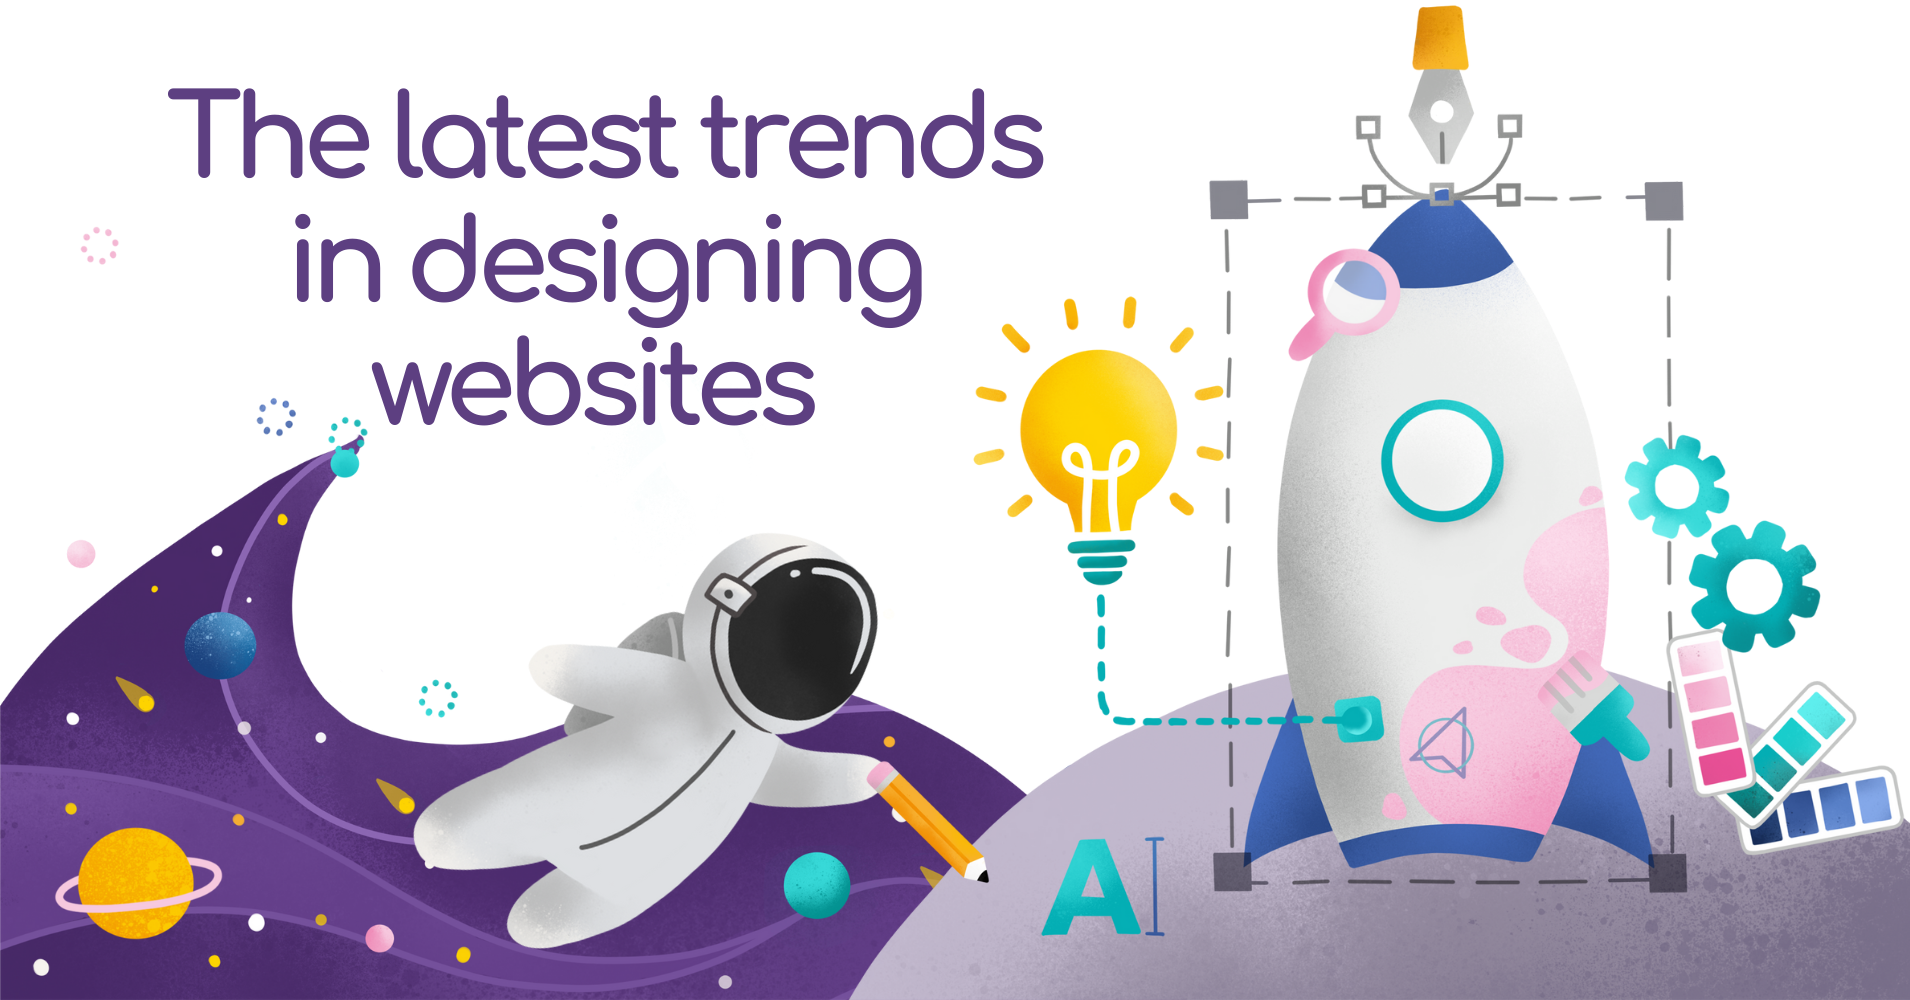 The latest trends in designing websites / e-commerce platforms